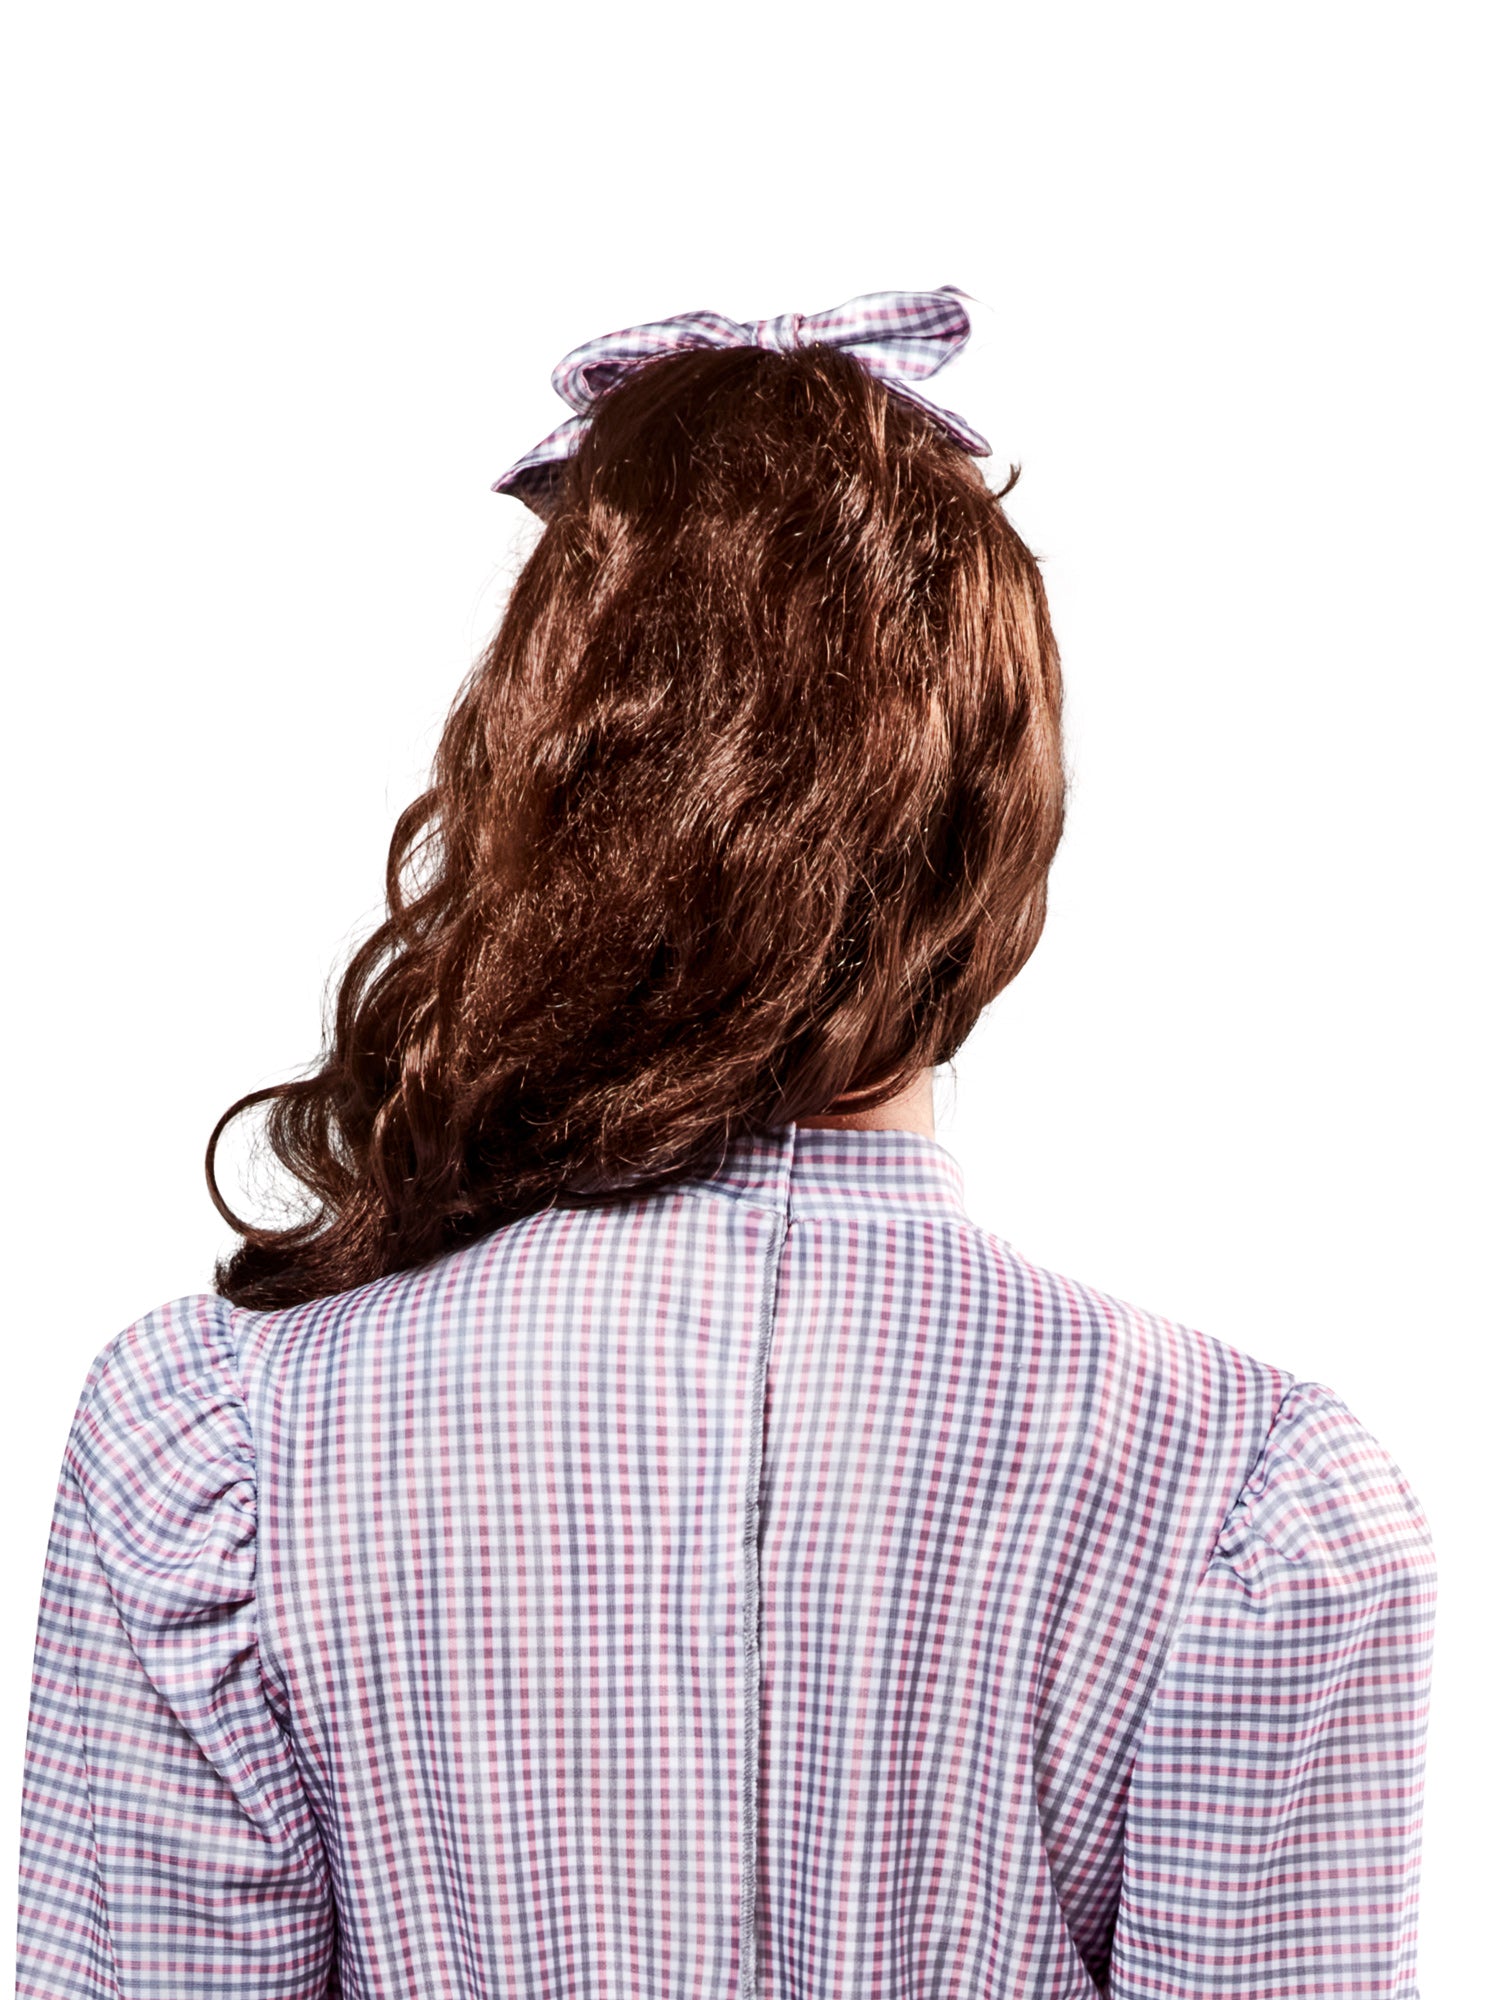 Women's American Girl Samantha Parkington Brown Wig with Bangs - costumes.com